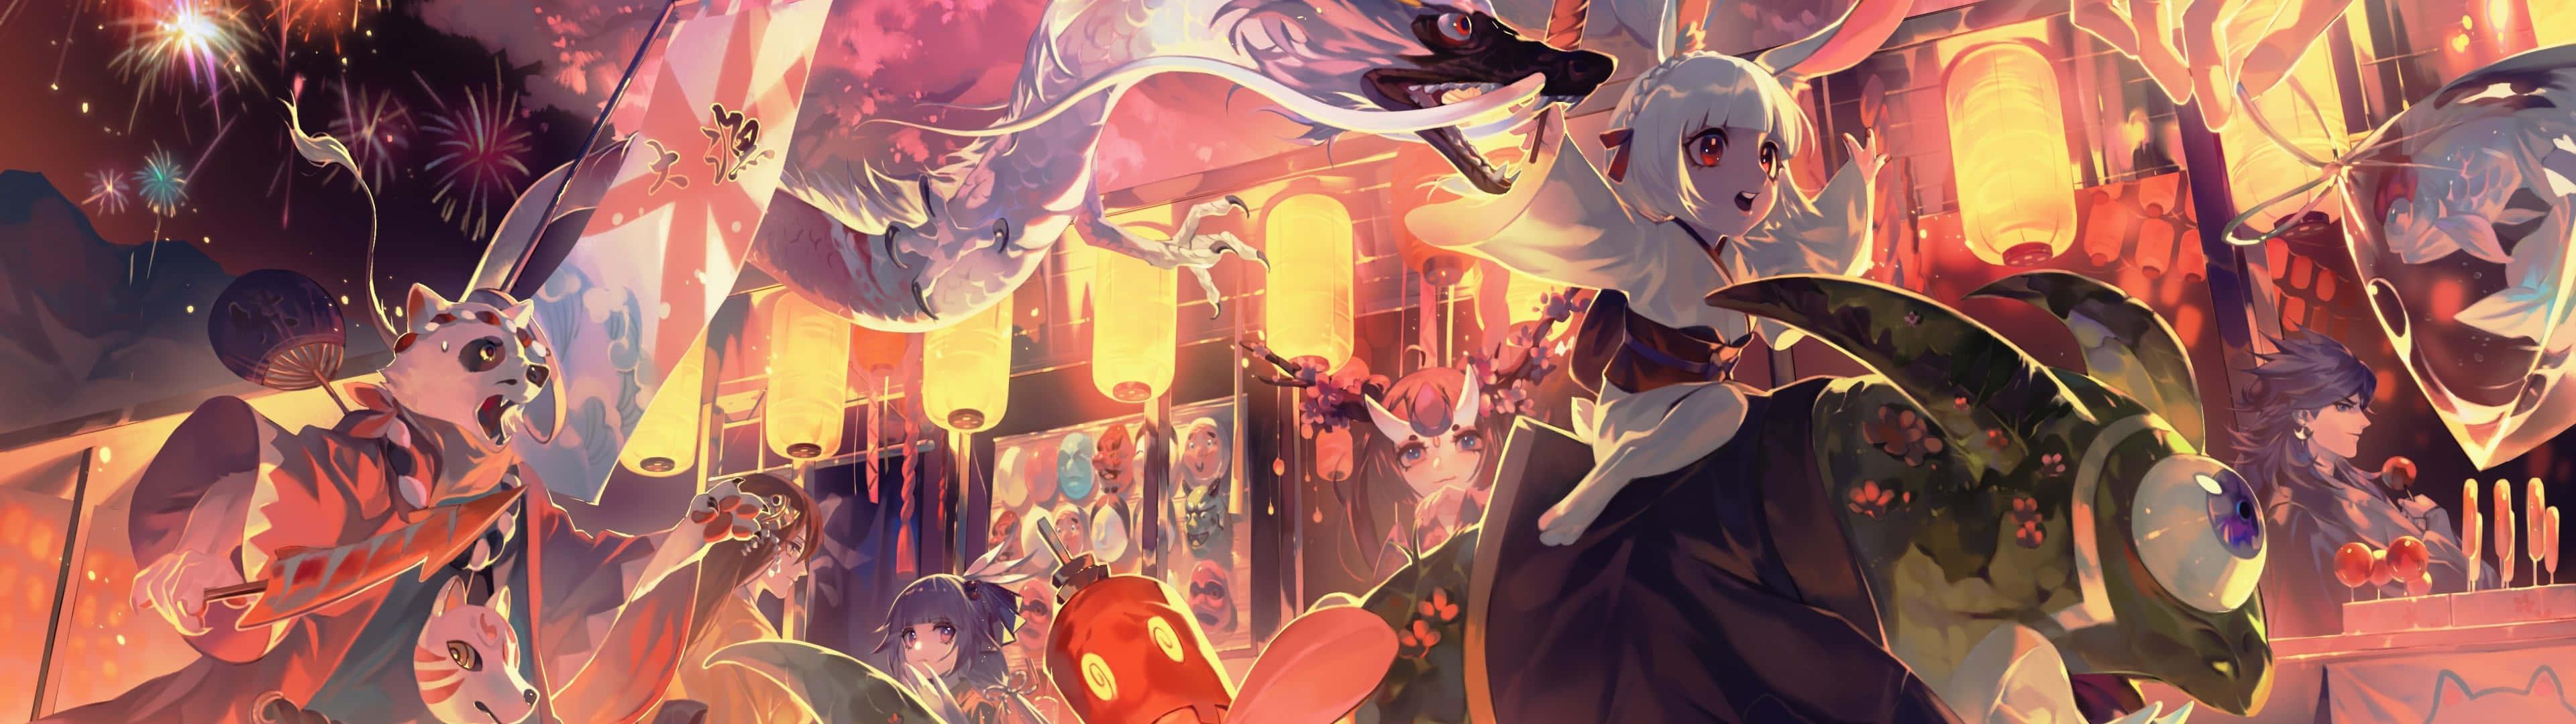 Download A surreal anime fantasy in full desktop HD Wallpaper